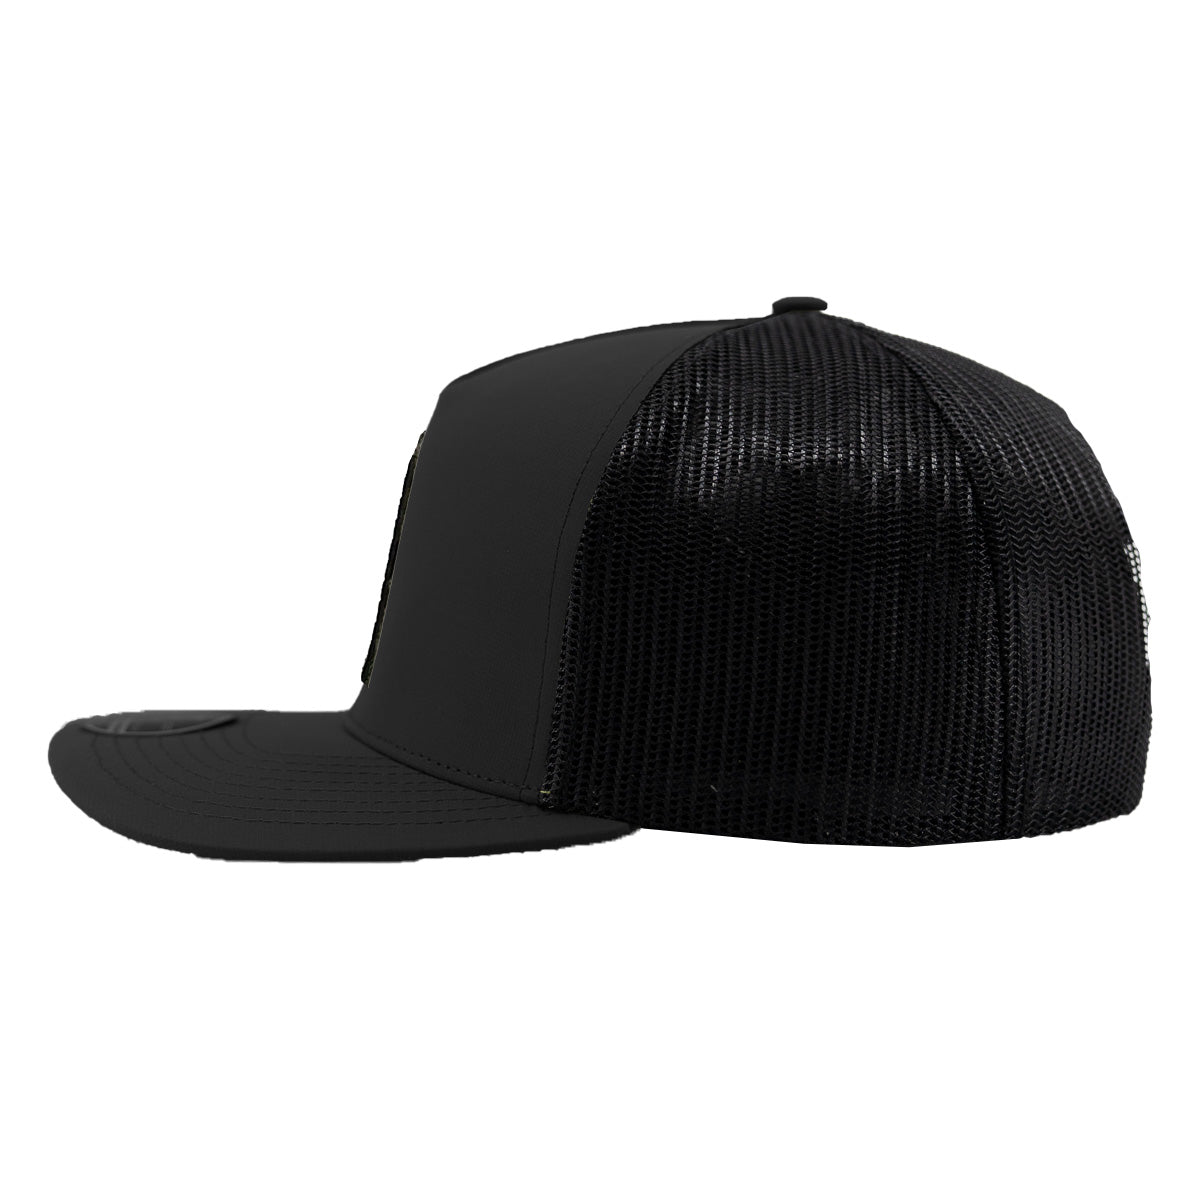 Zapped Headwear Black Panther Hat